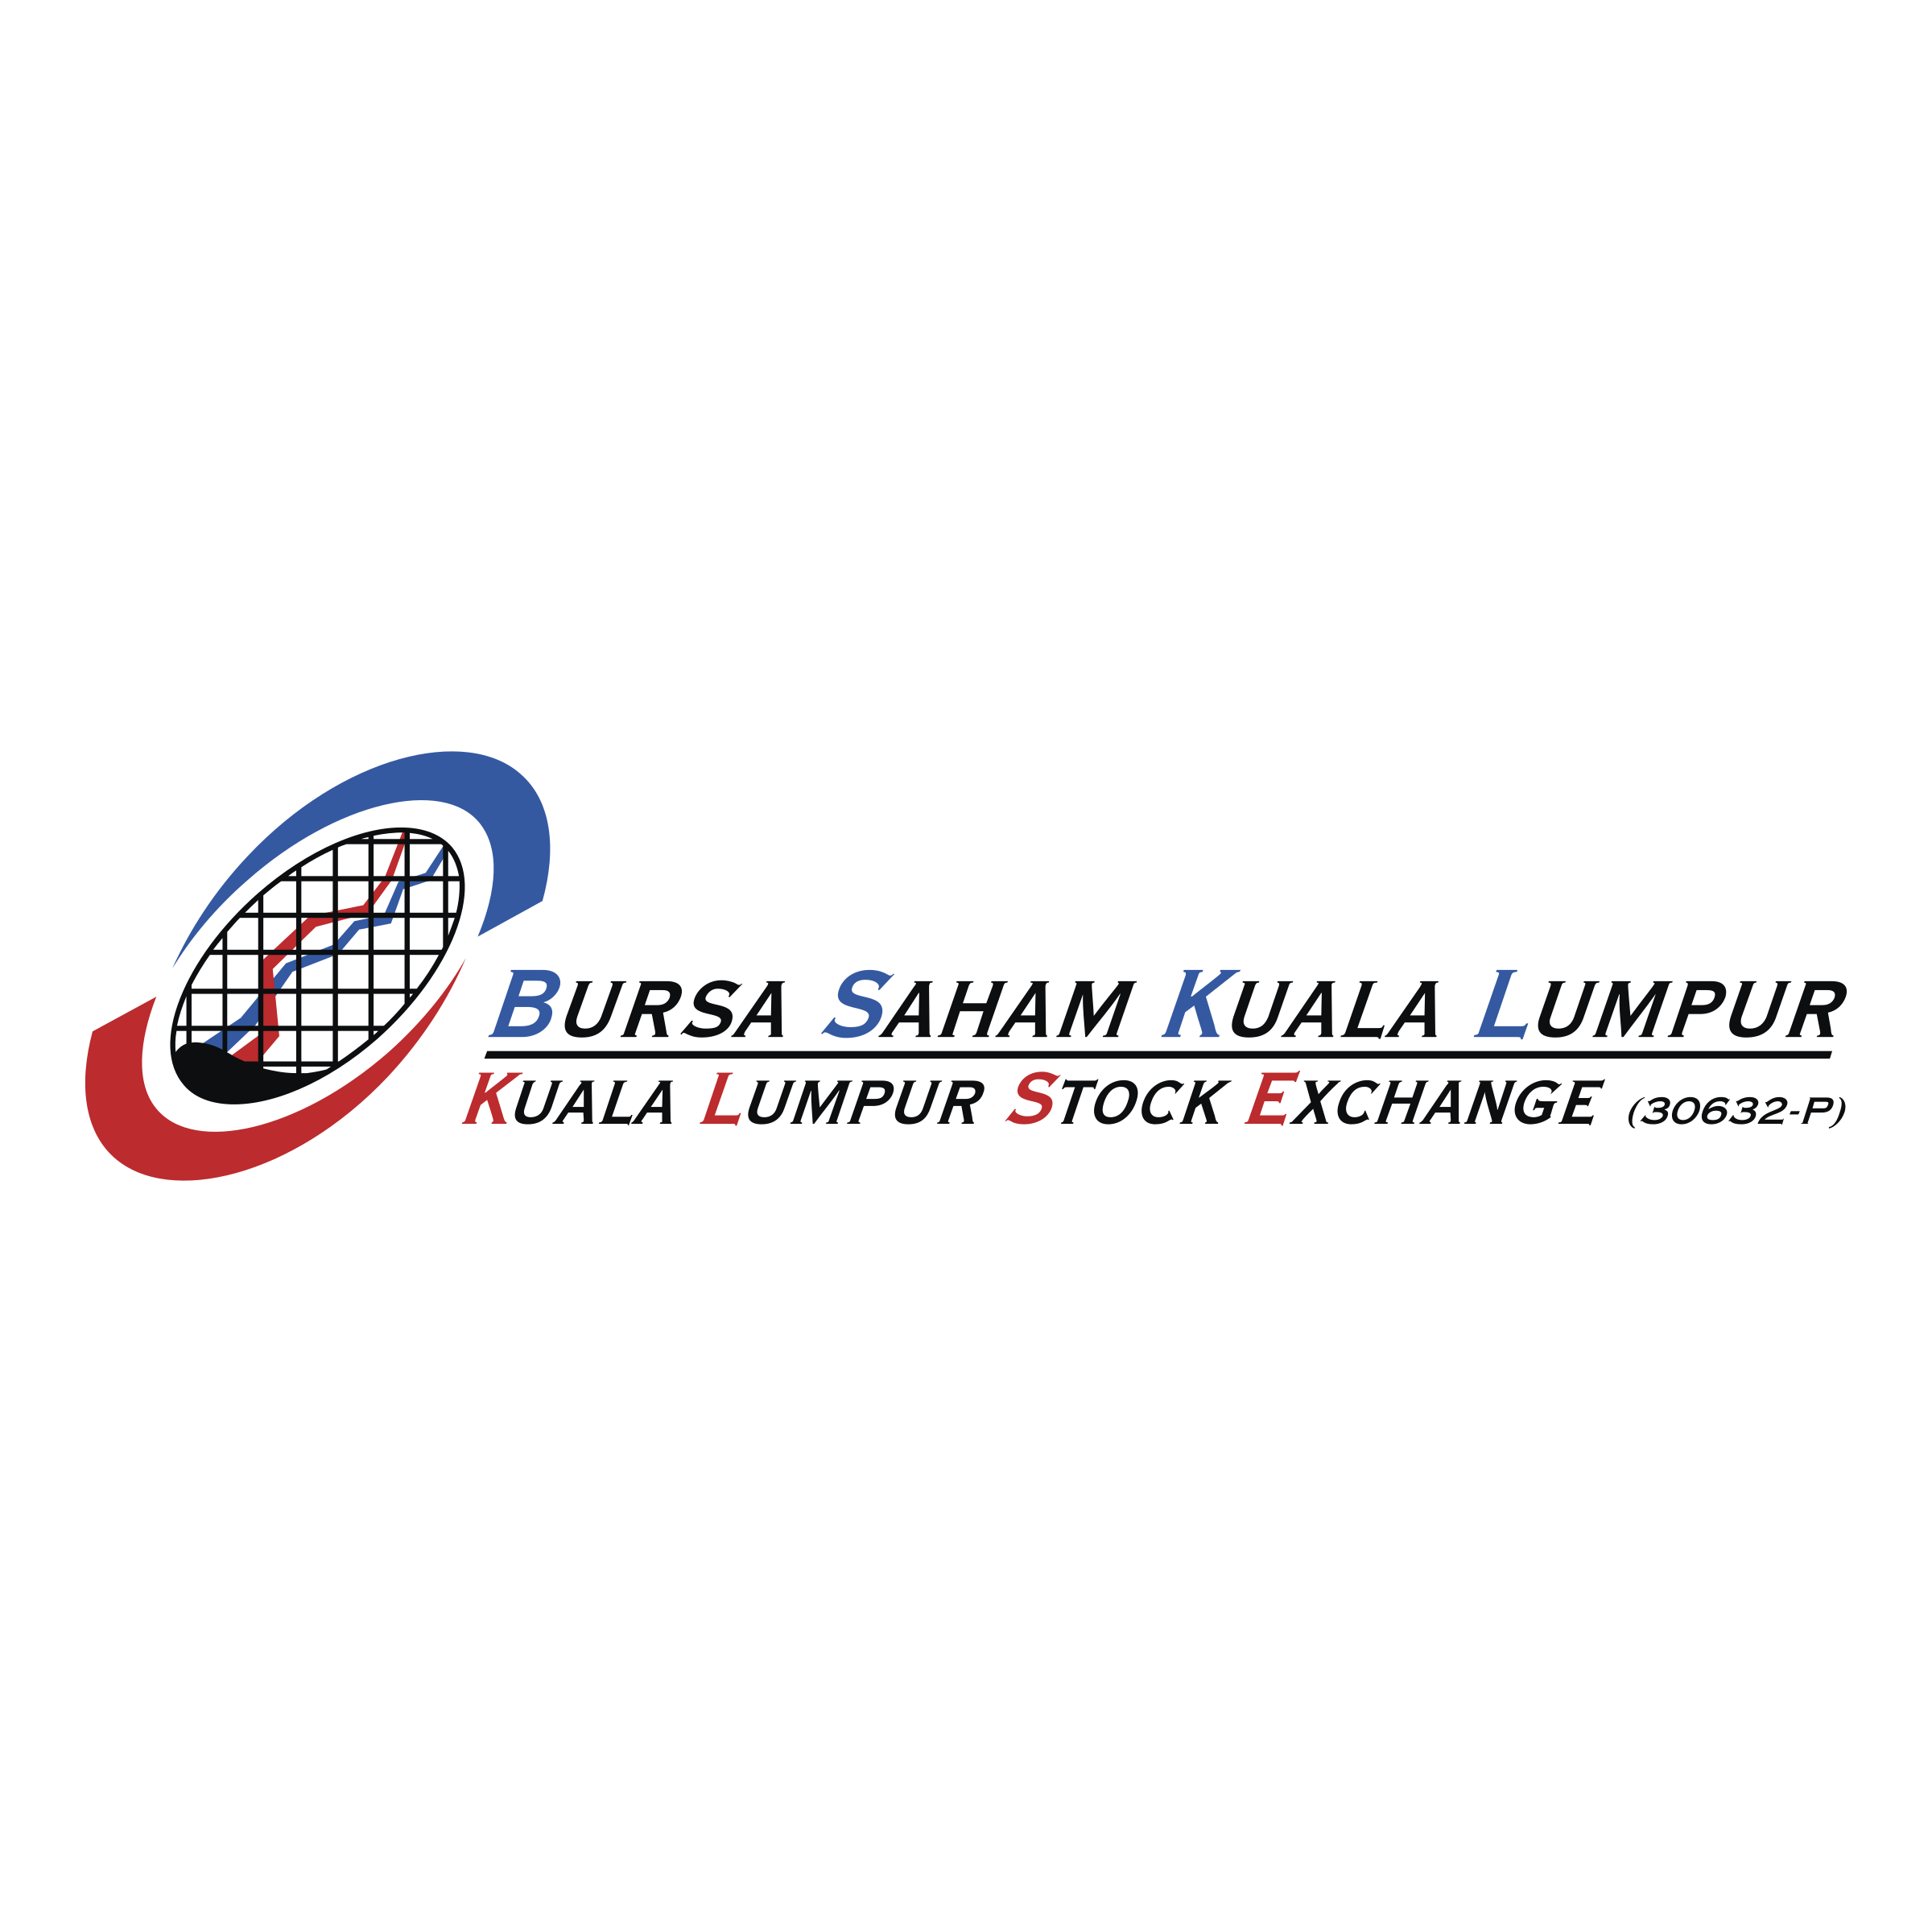 Kaixin001 Logo - Kuala Lumpur Stock Exchange Logo PNG Transparent & SVG Vector ...